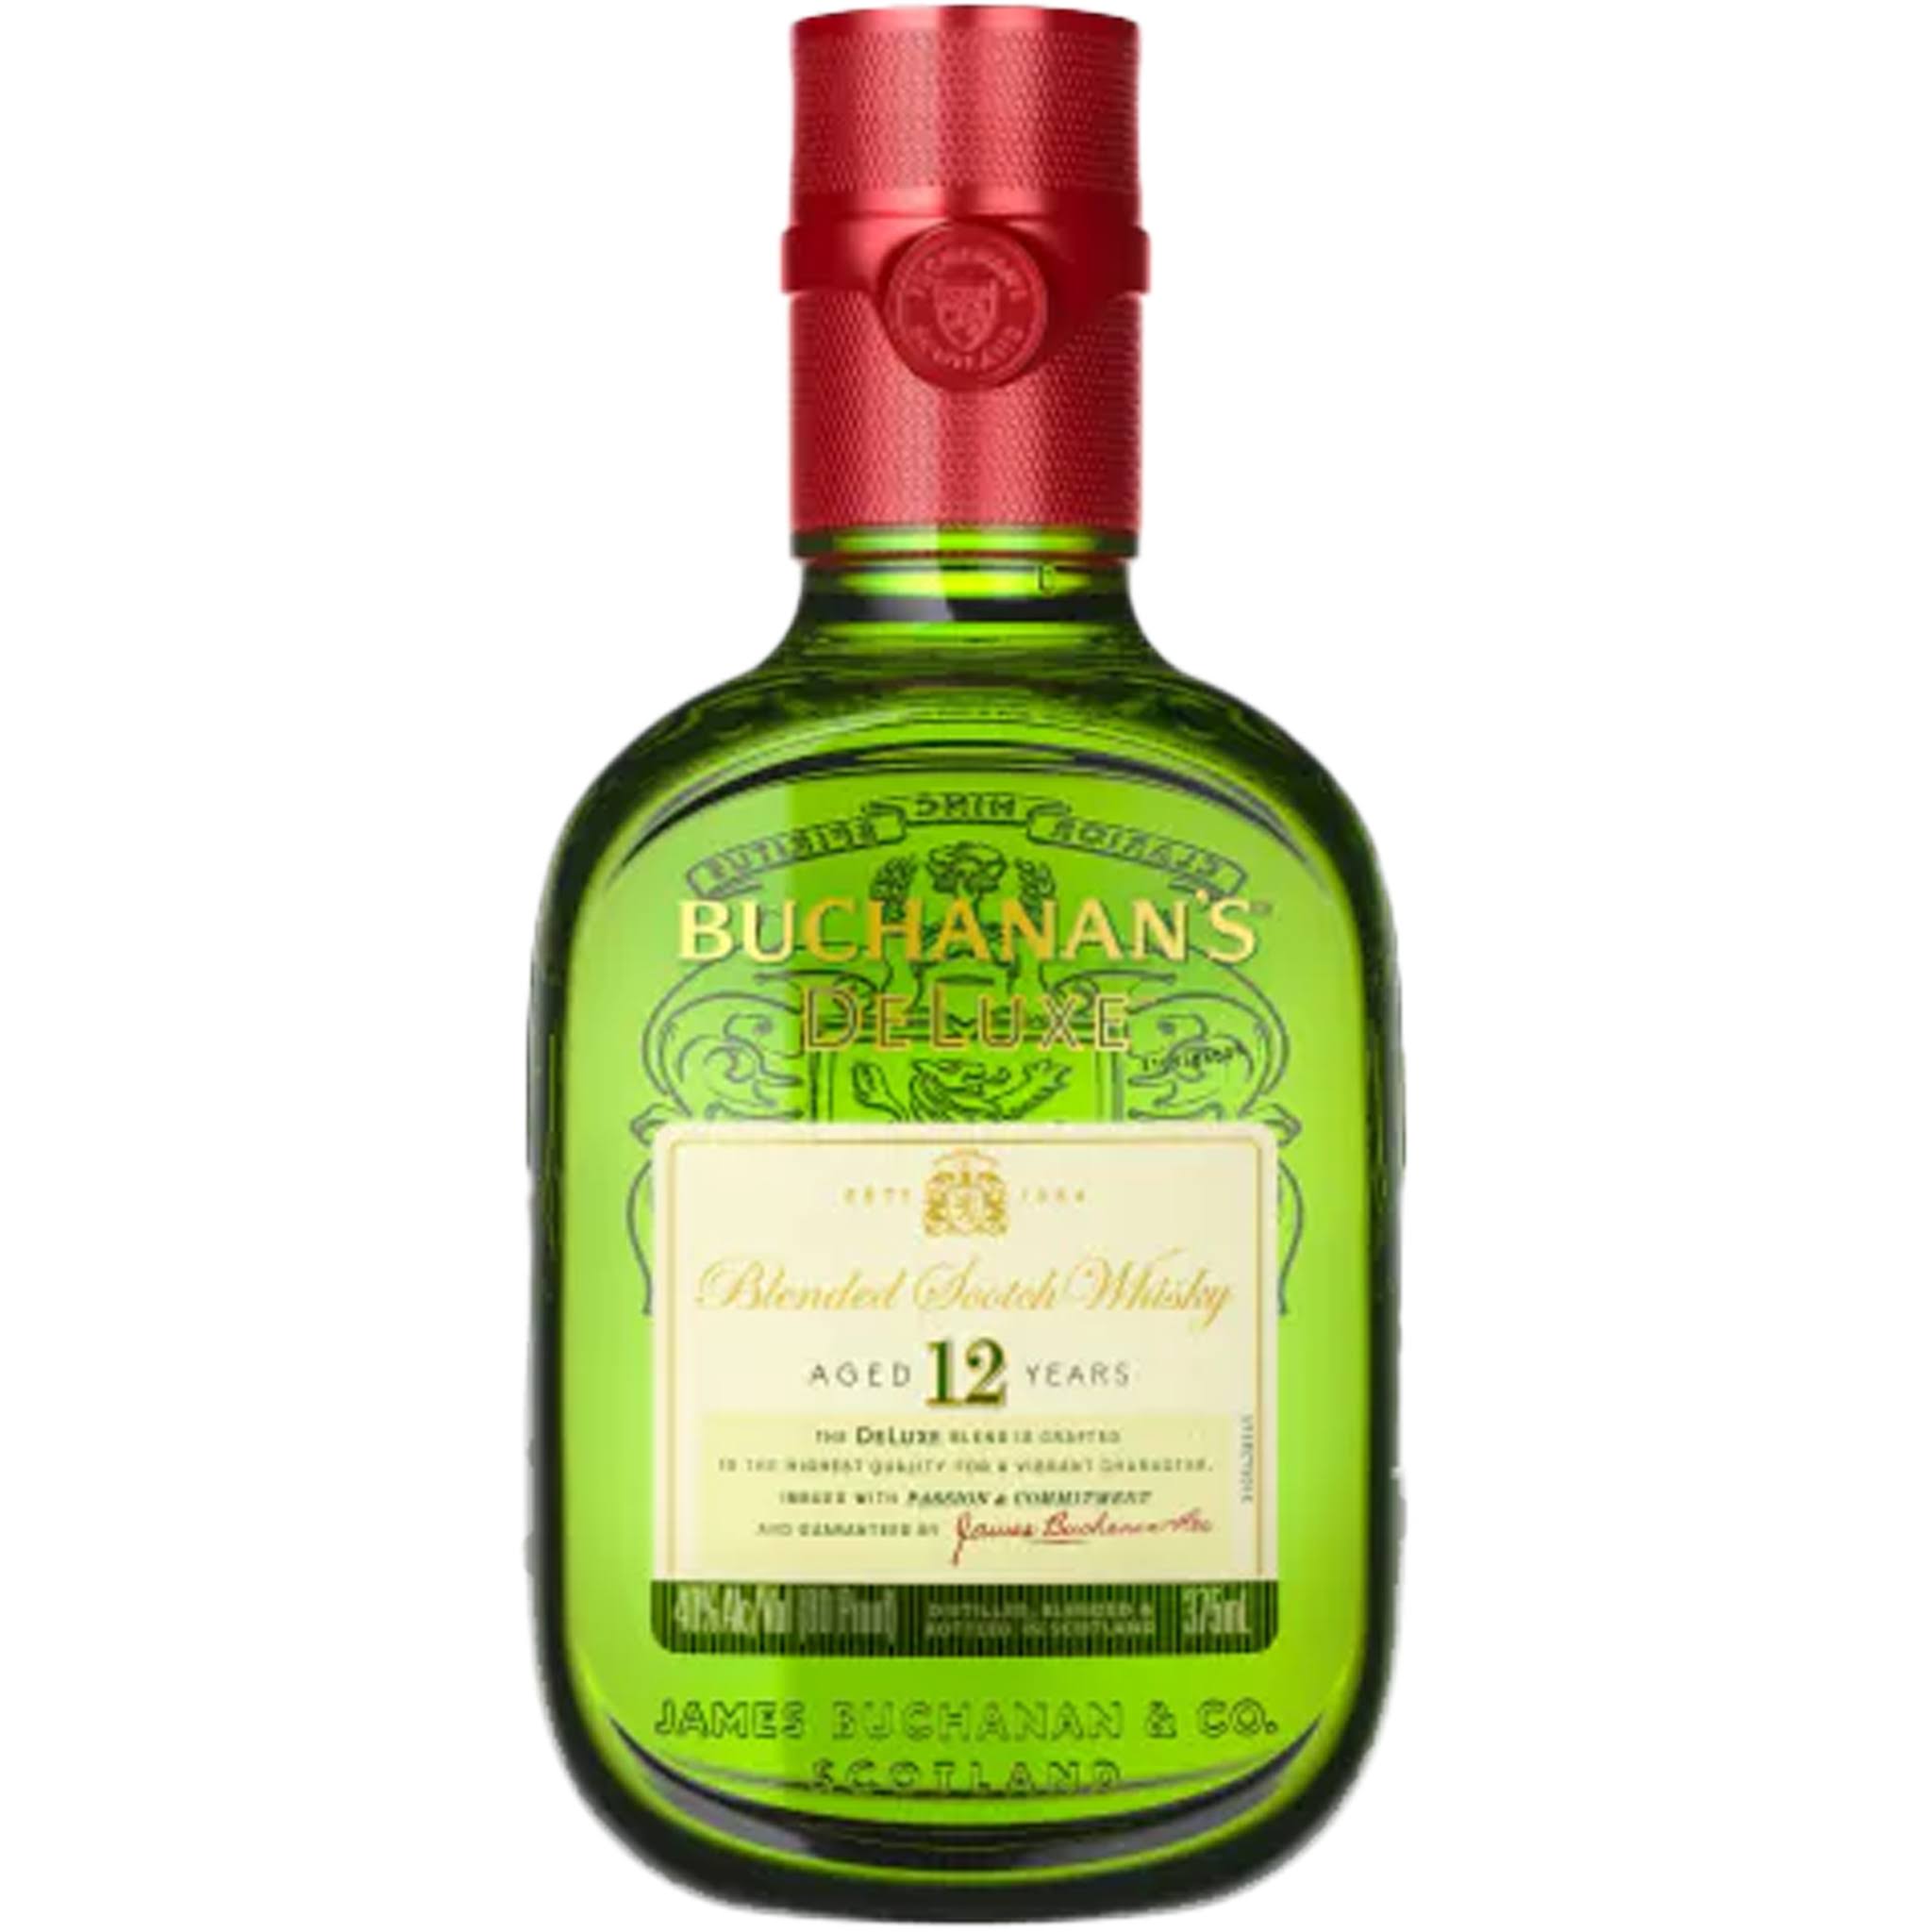 Buchanans De Luxe 12 Year Old Blended Scotch Whisky 375ml Bottle